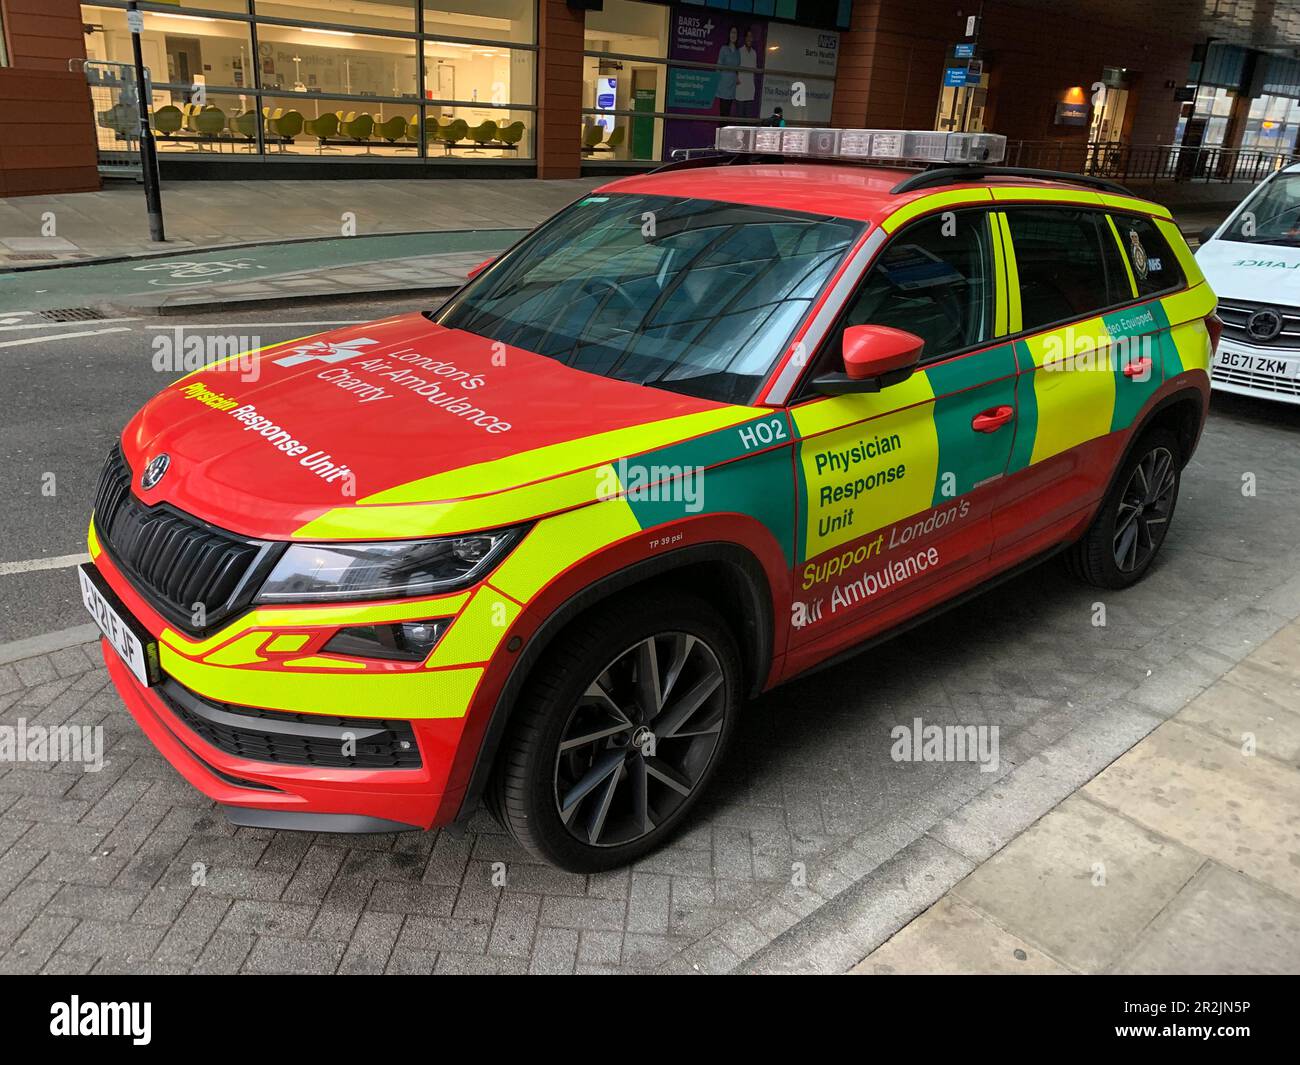 Physician Response Unit London's Air Ambulance Skoda Vehicle at Royal London Hospital, Whitechapel Stock Photo